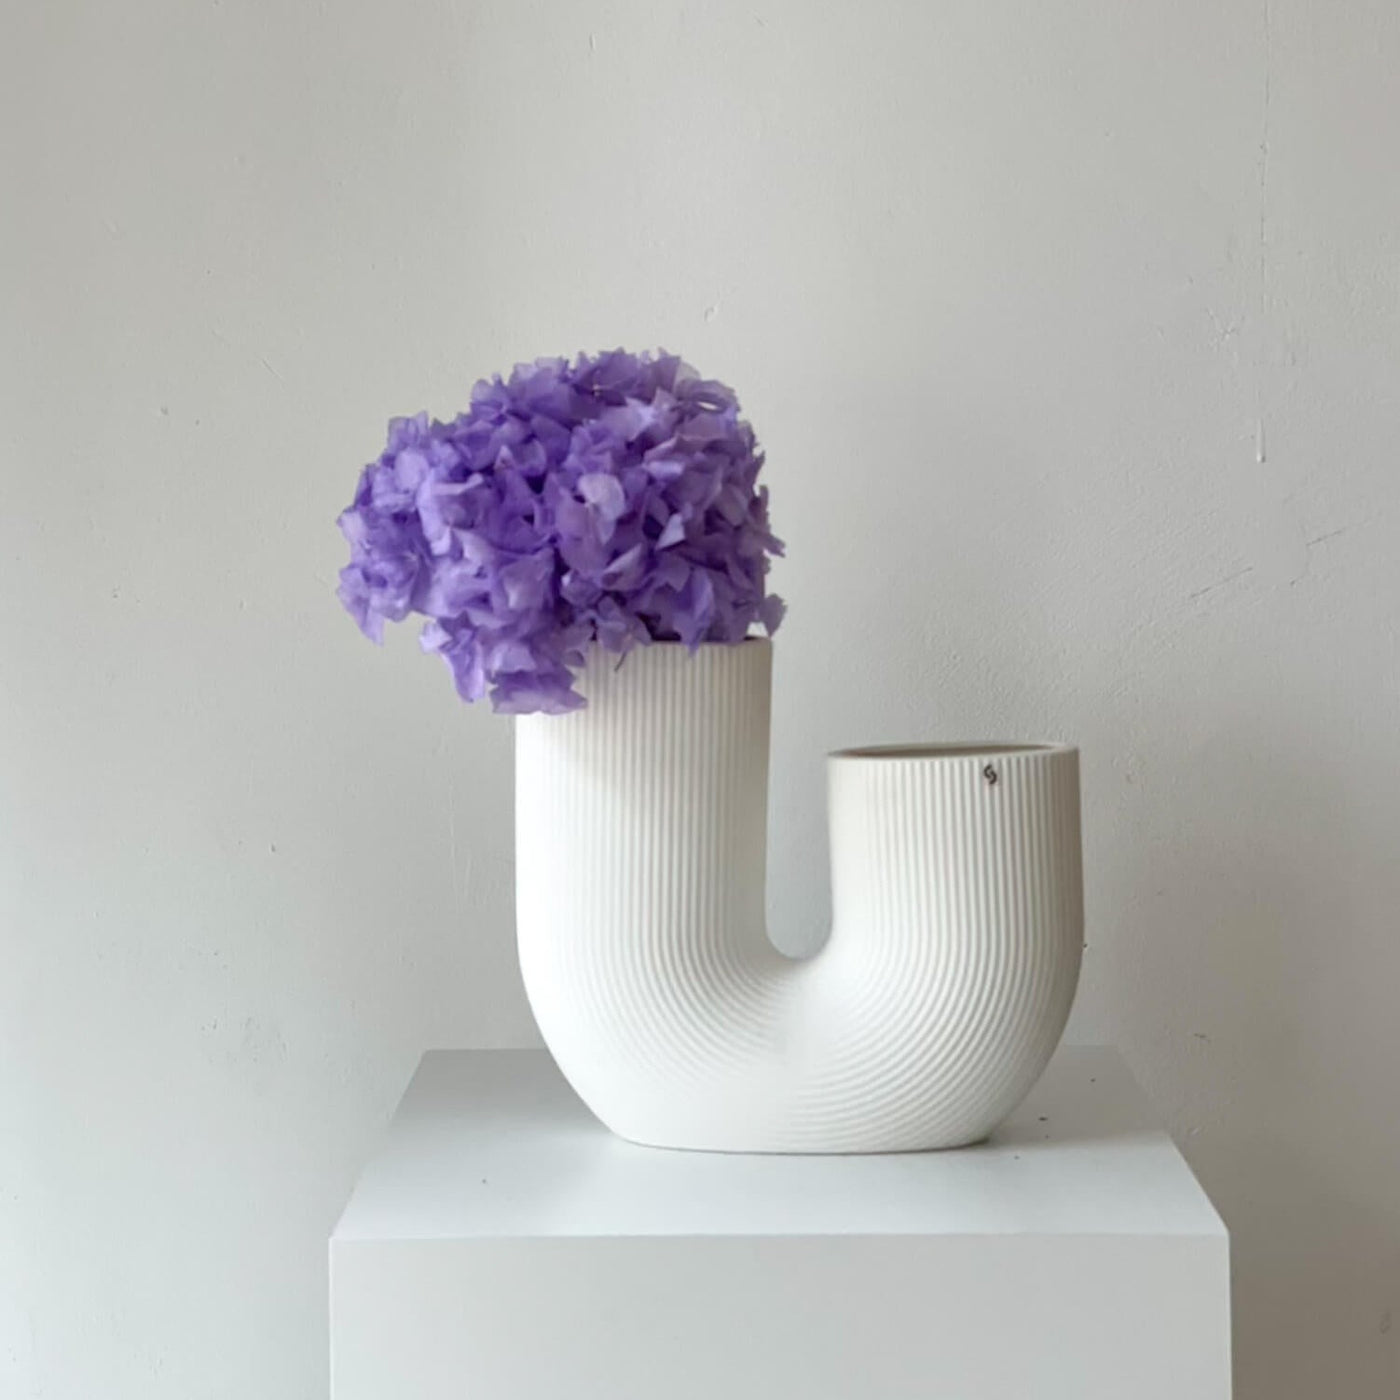 Hortensien konserviert | viele Farben | tolle Blüte | 30-40 cm - Farbe: lila